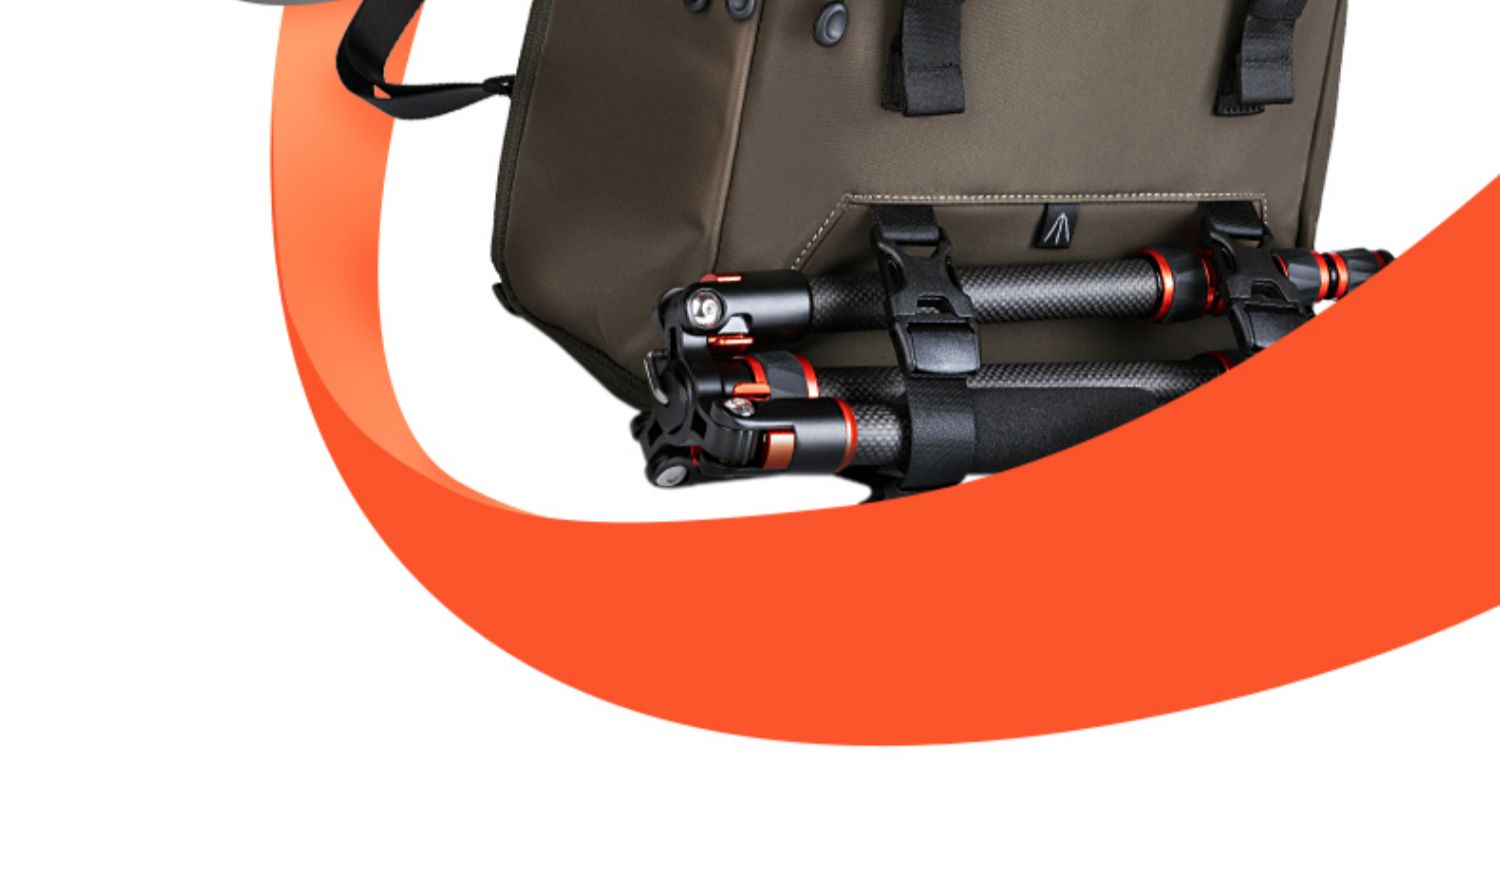 Professional Photography Large Capacity Camera Bag Backpack